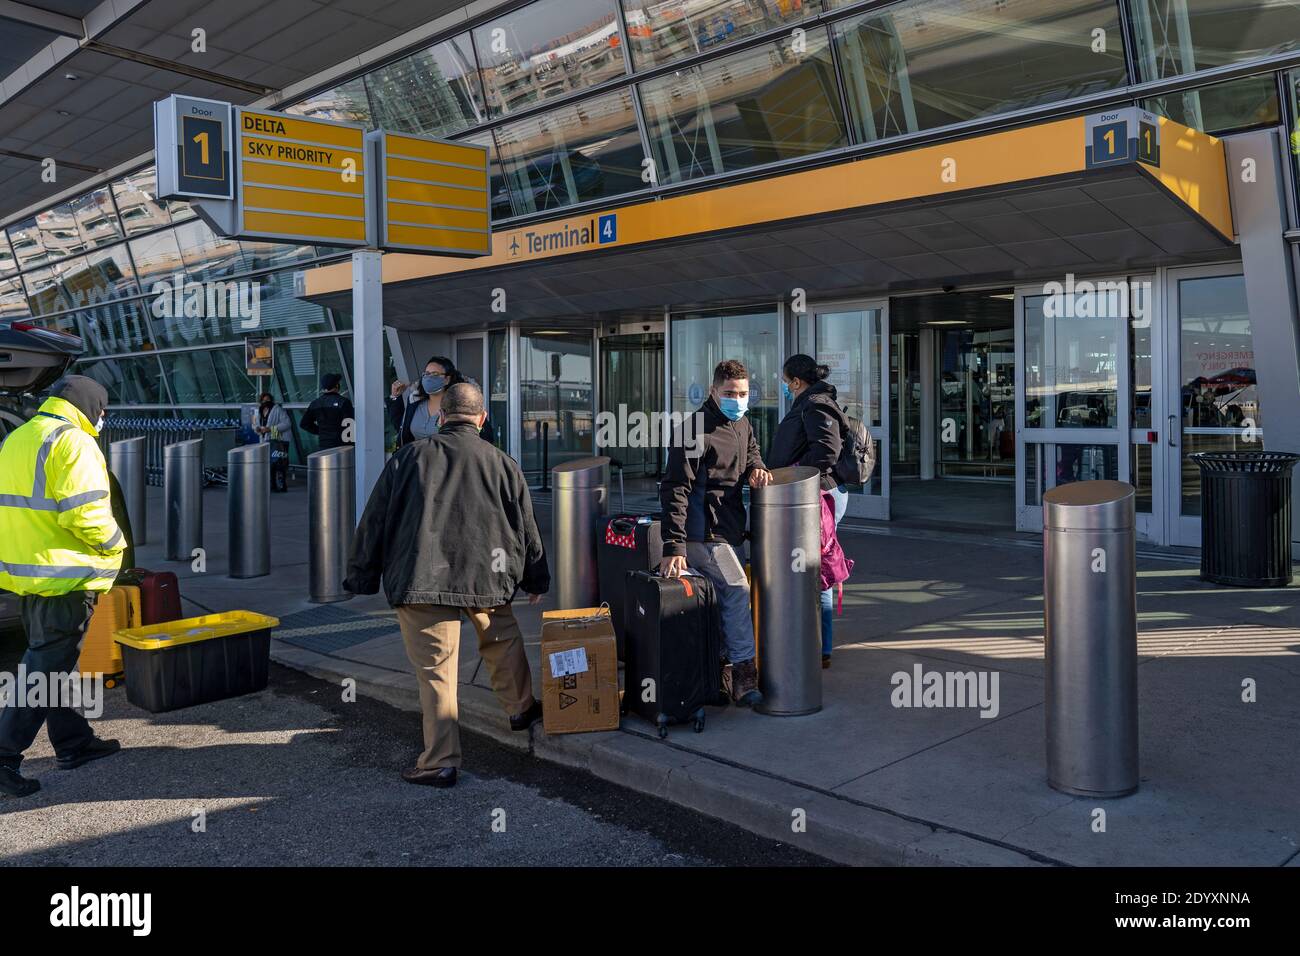 NEW YORK, NY – DECEMBER 27: Passengers arrive at terminal 4 at John F. Kennedy International Airport (JFK) on December 27, 2020 in New York City. Stock Photo